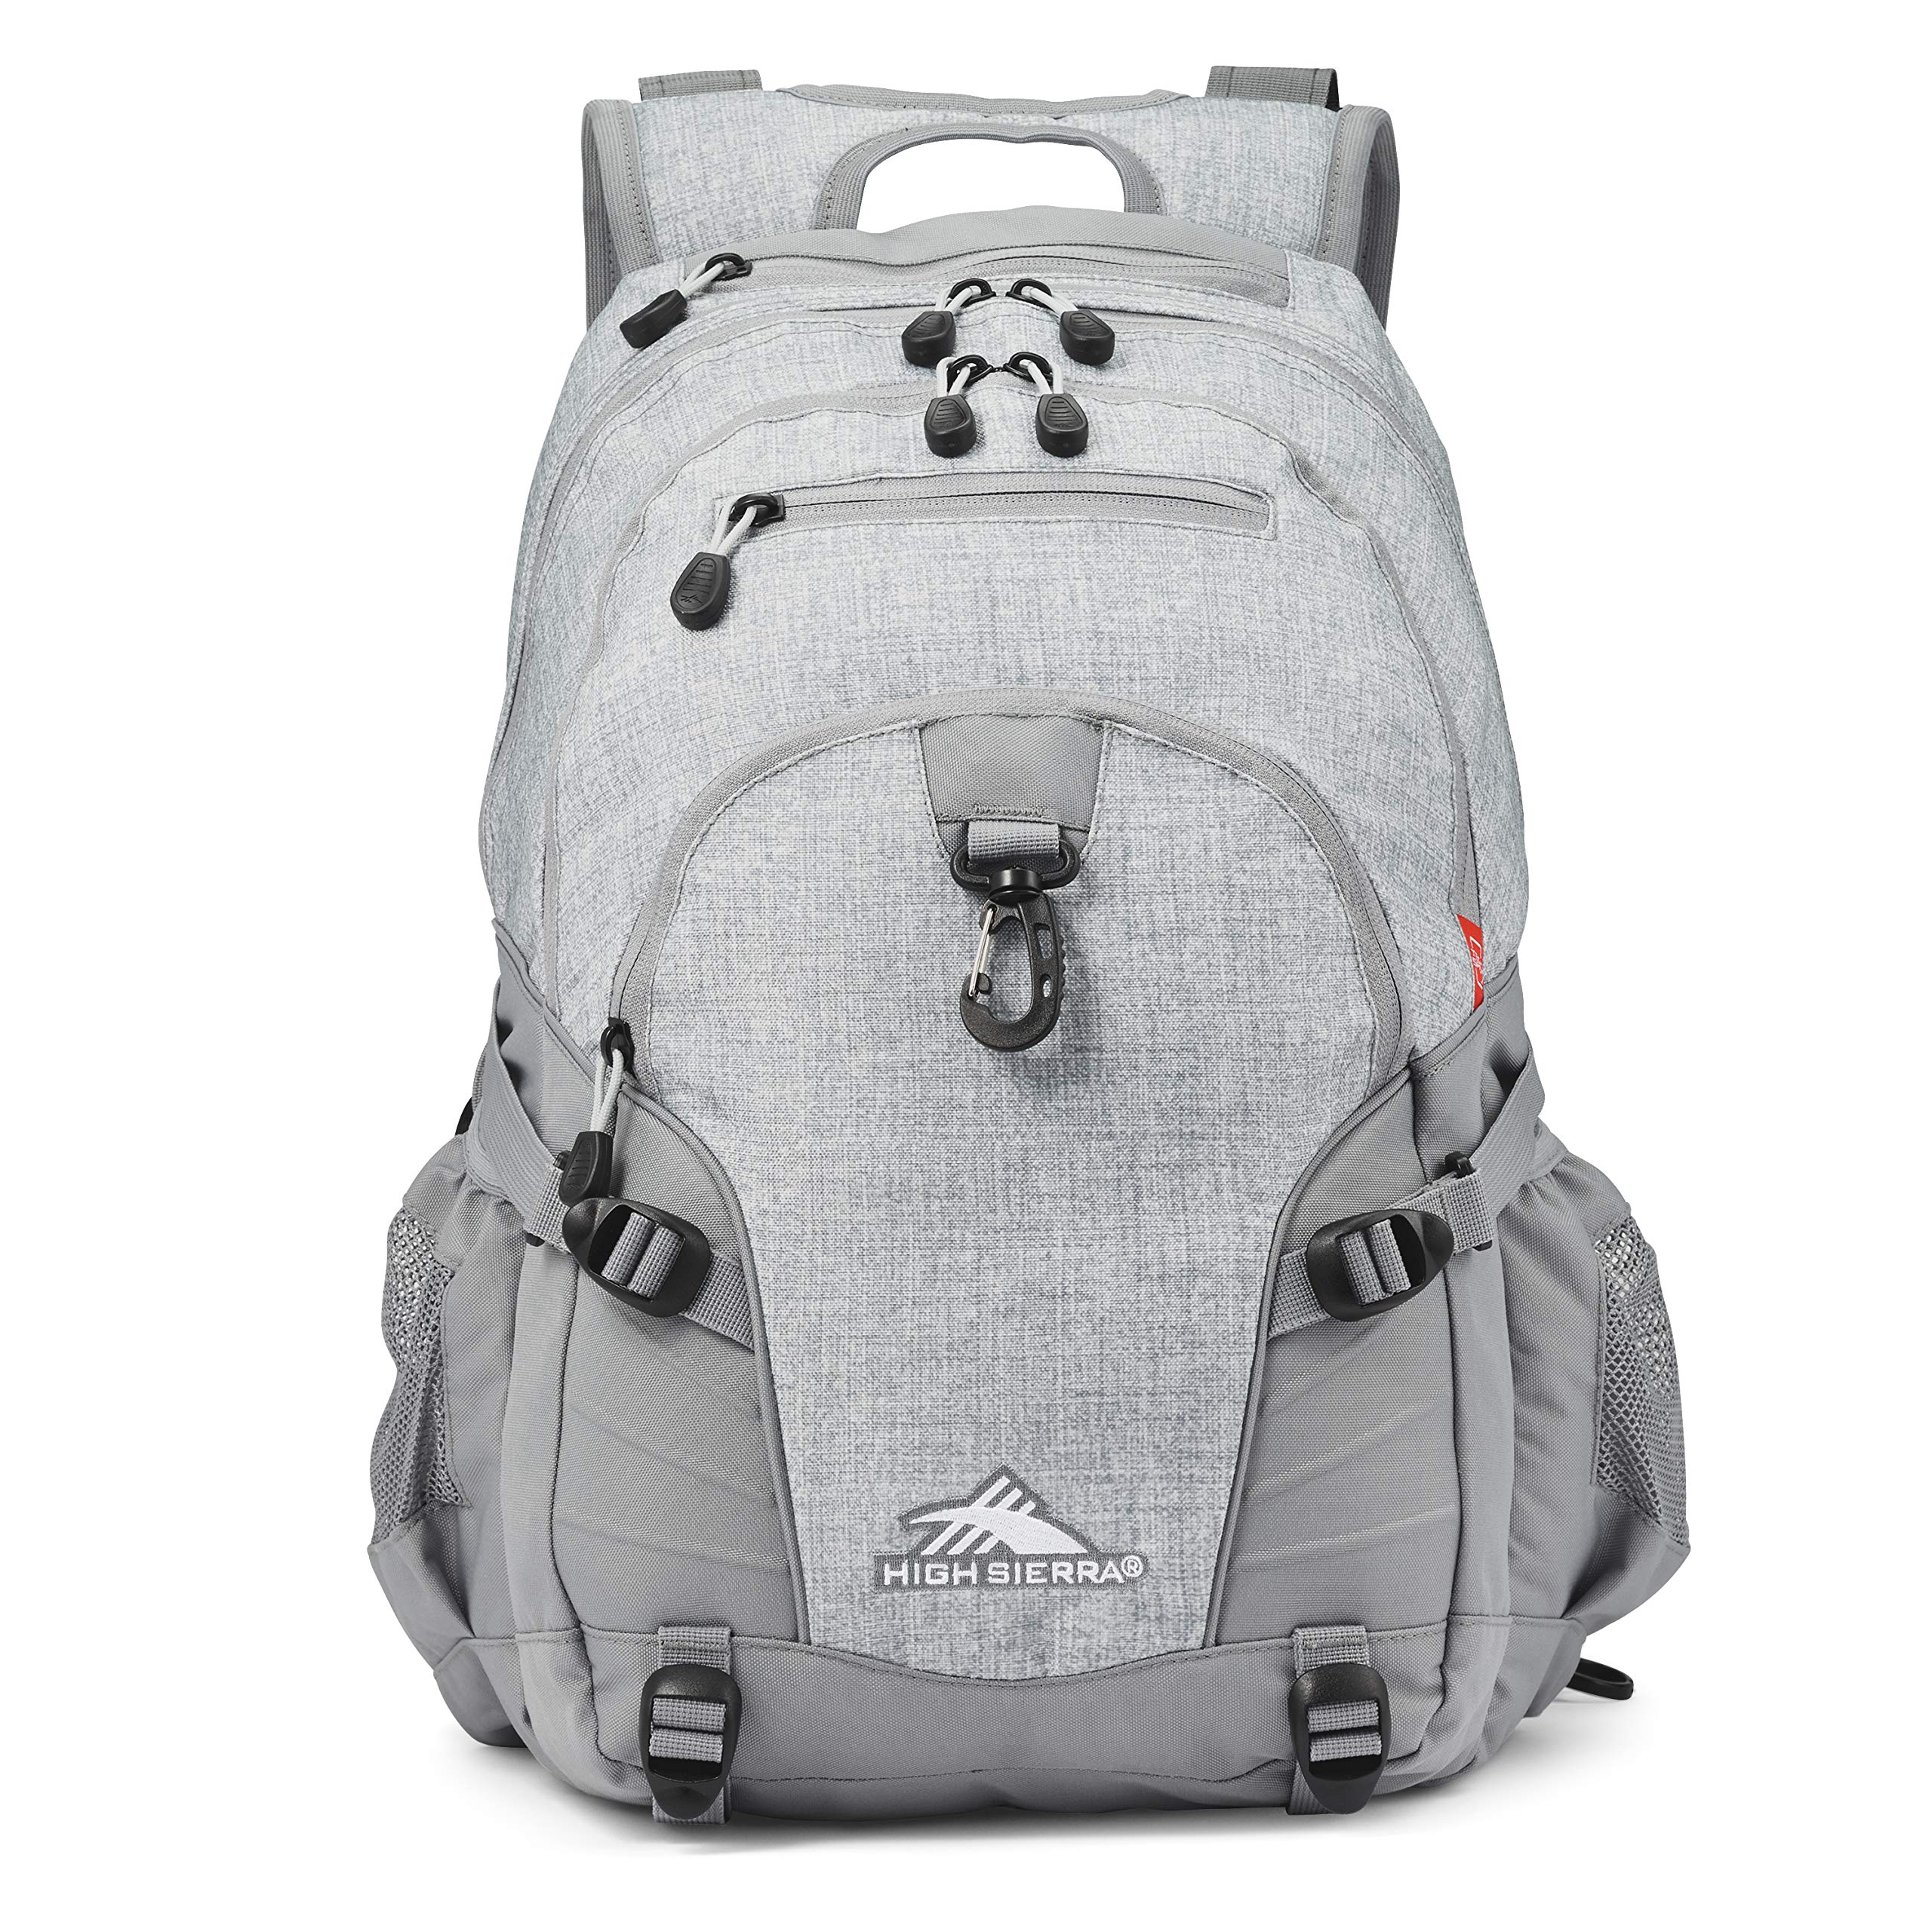 High Sierra Loop Backpack, Travel, or Work Bookbag with tablet sleeve, One Size, Silver Heather